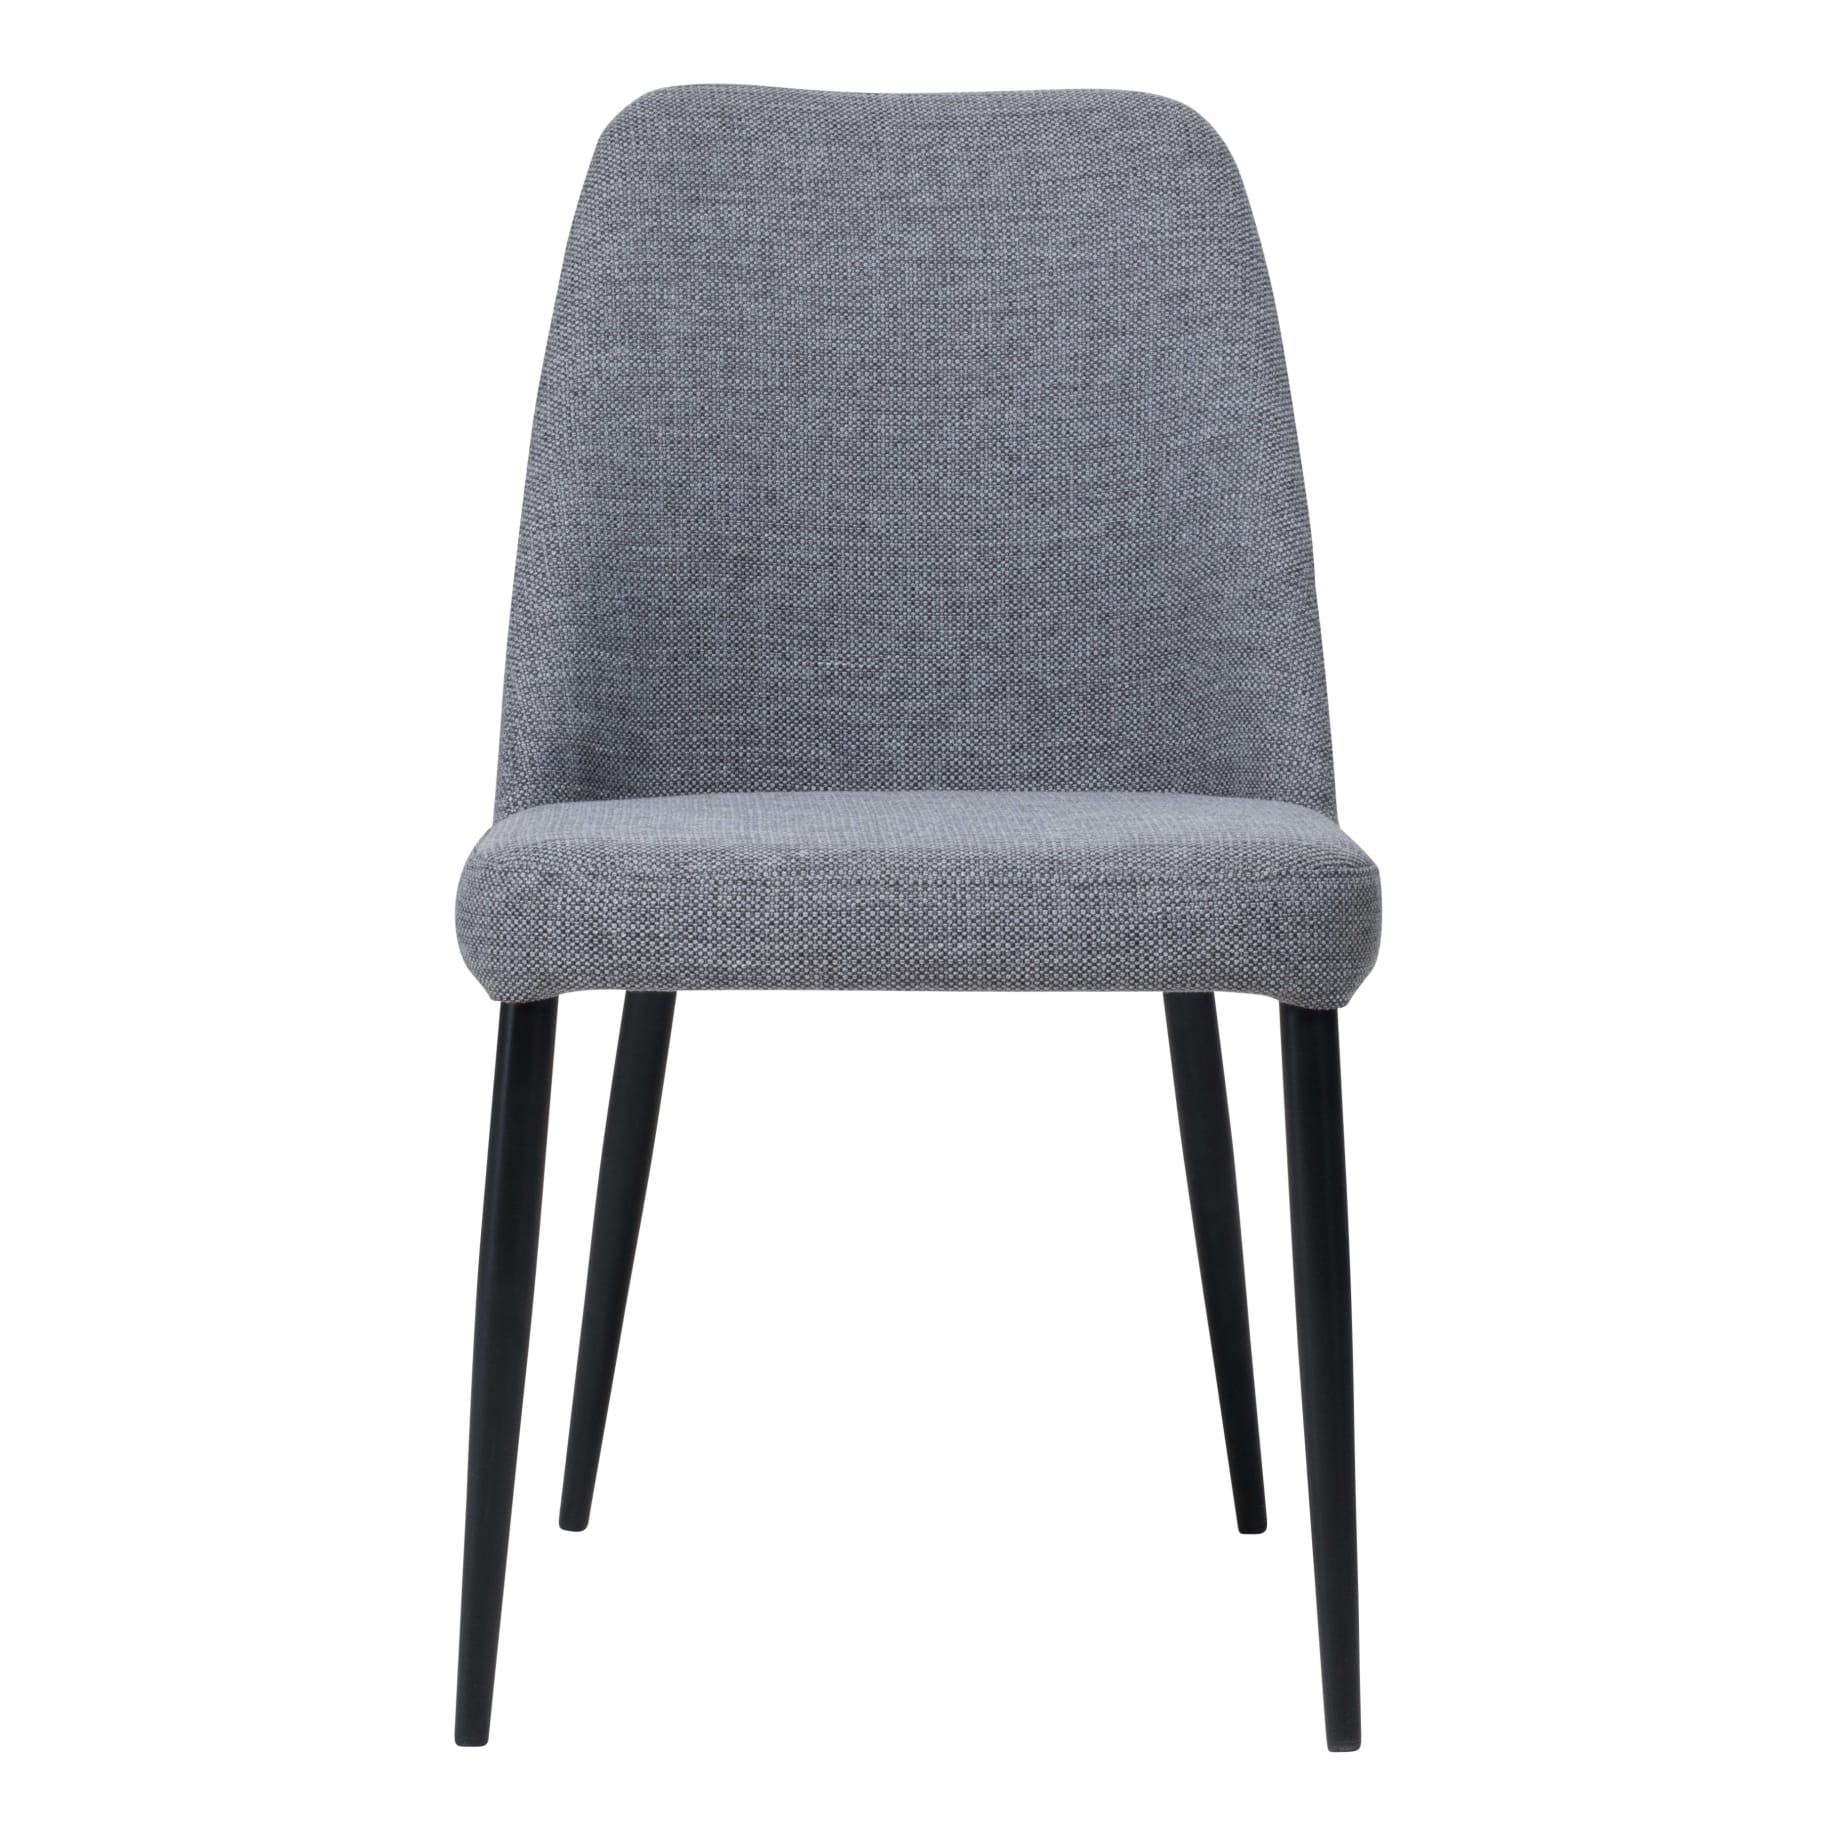 Avon Dining Chair in Dark Grey Fabric / Black Leg